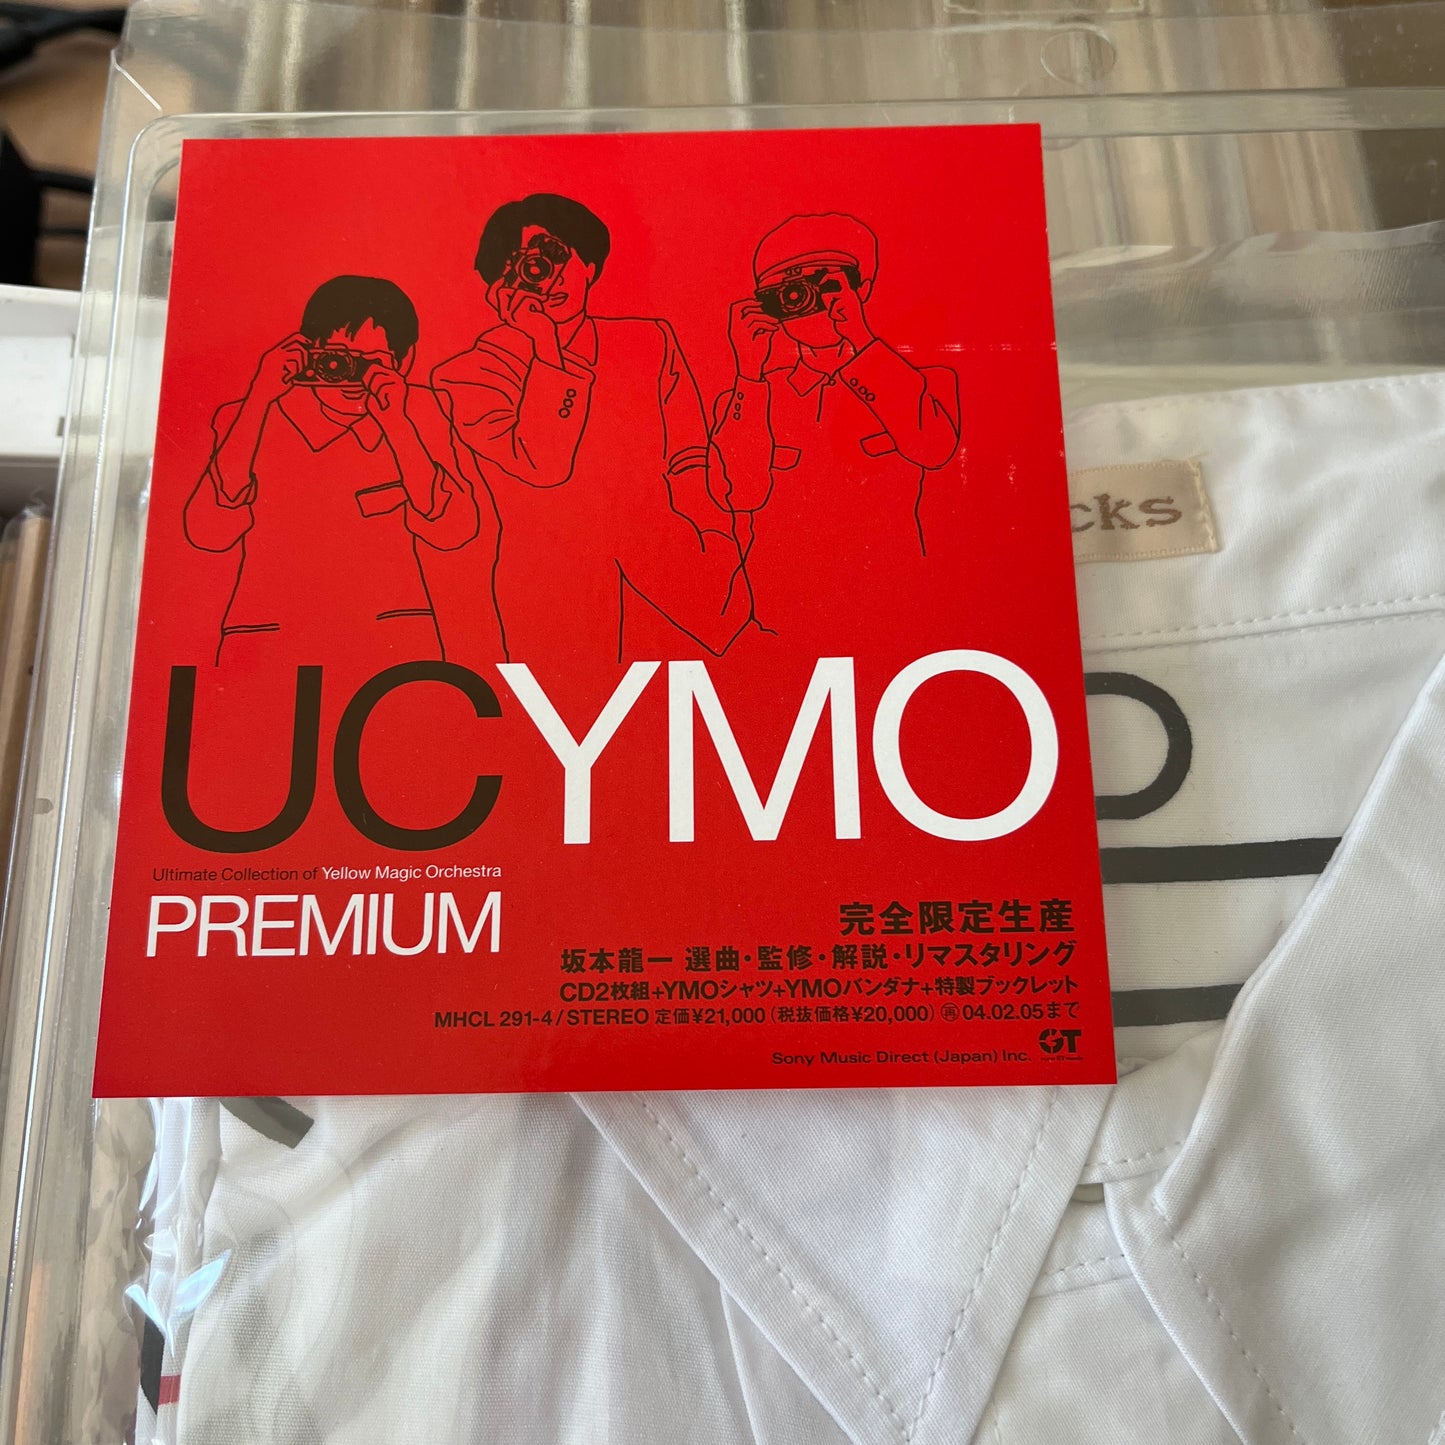 Yellow Magic Orchestra – UC YMO Premium – Revelation Time